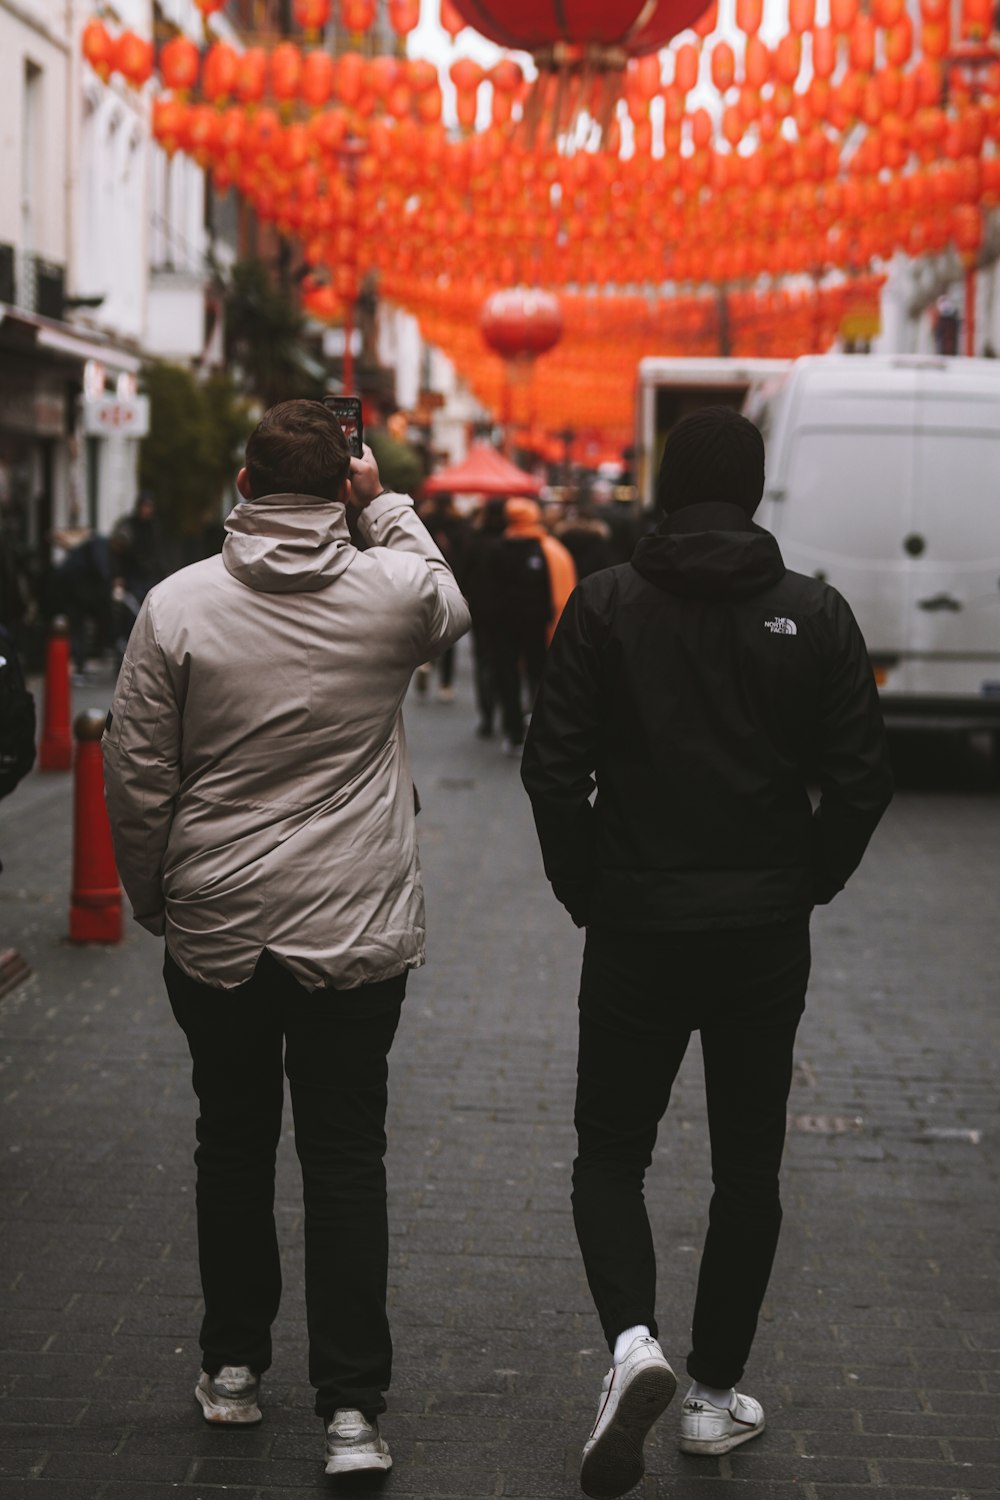 two people walking down a city street under orange lanterns